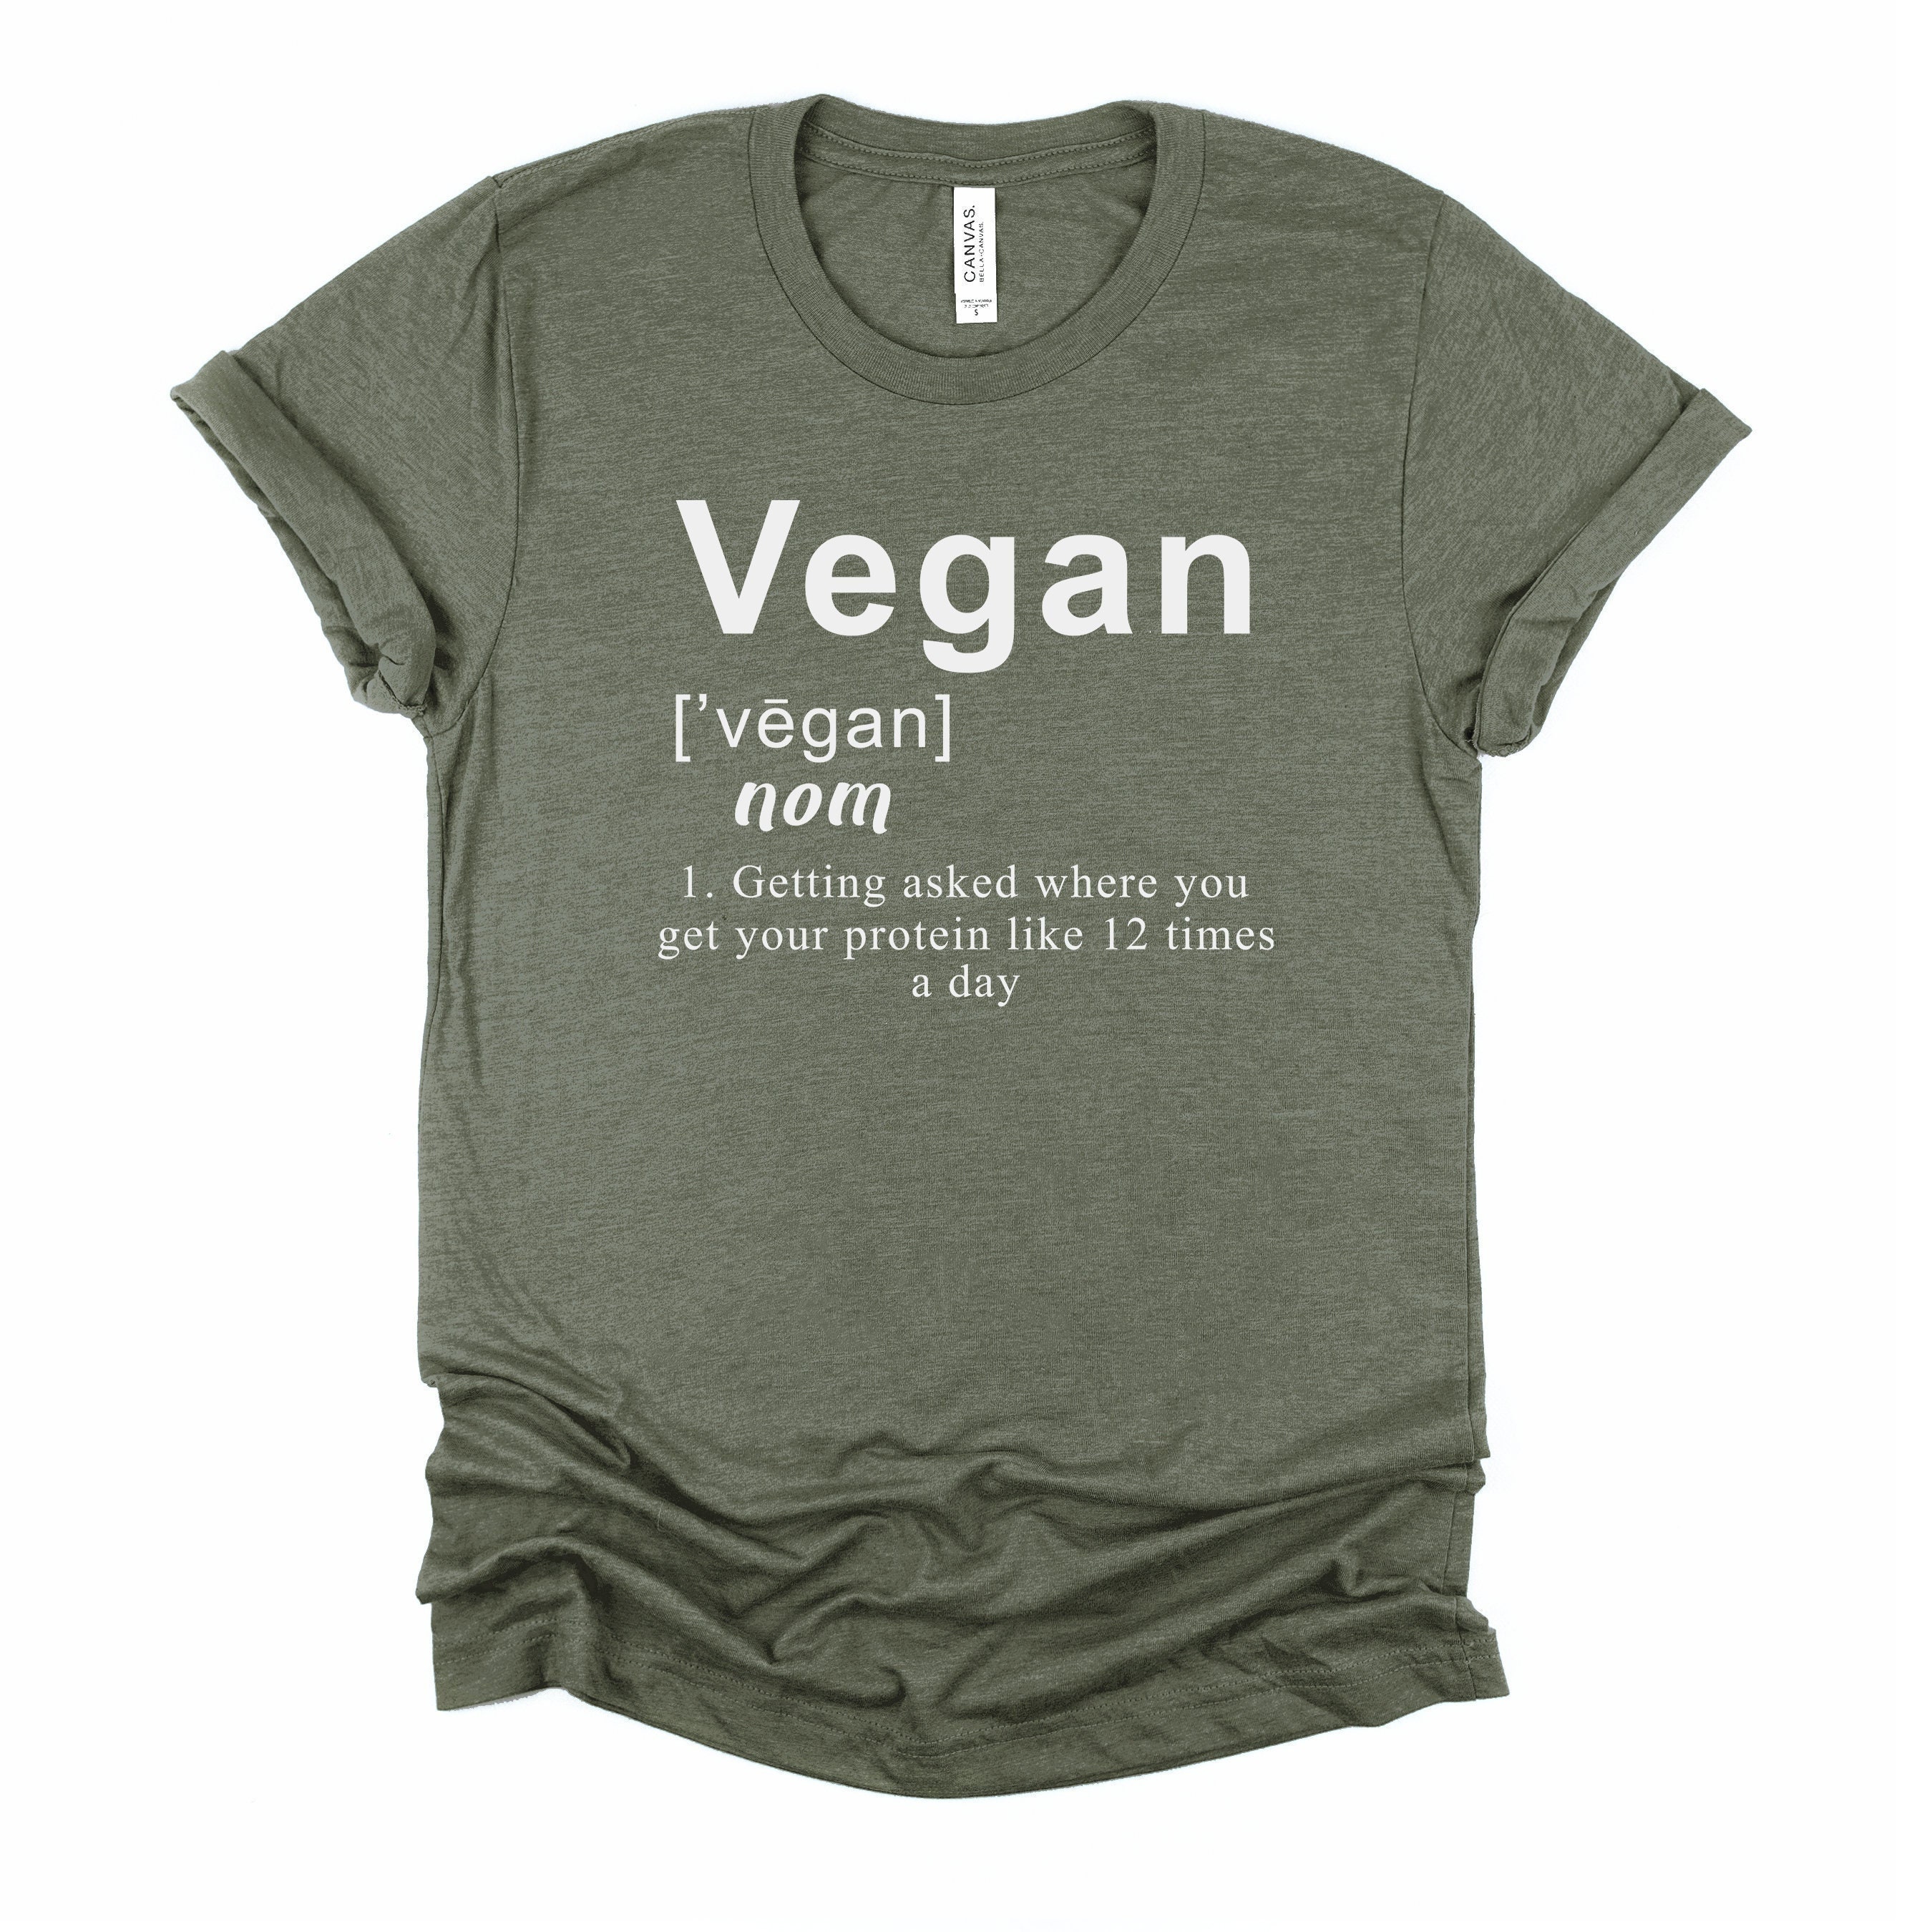 Vegan Definition Shirt Powered By Plants T Shirt Vegetarian Etsy